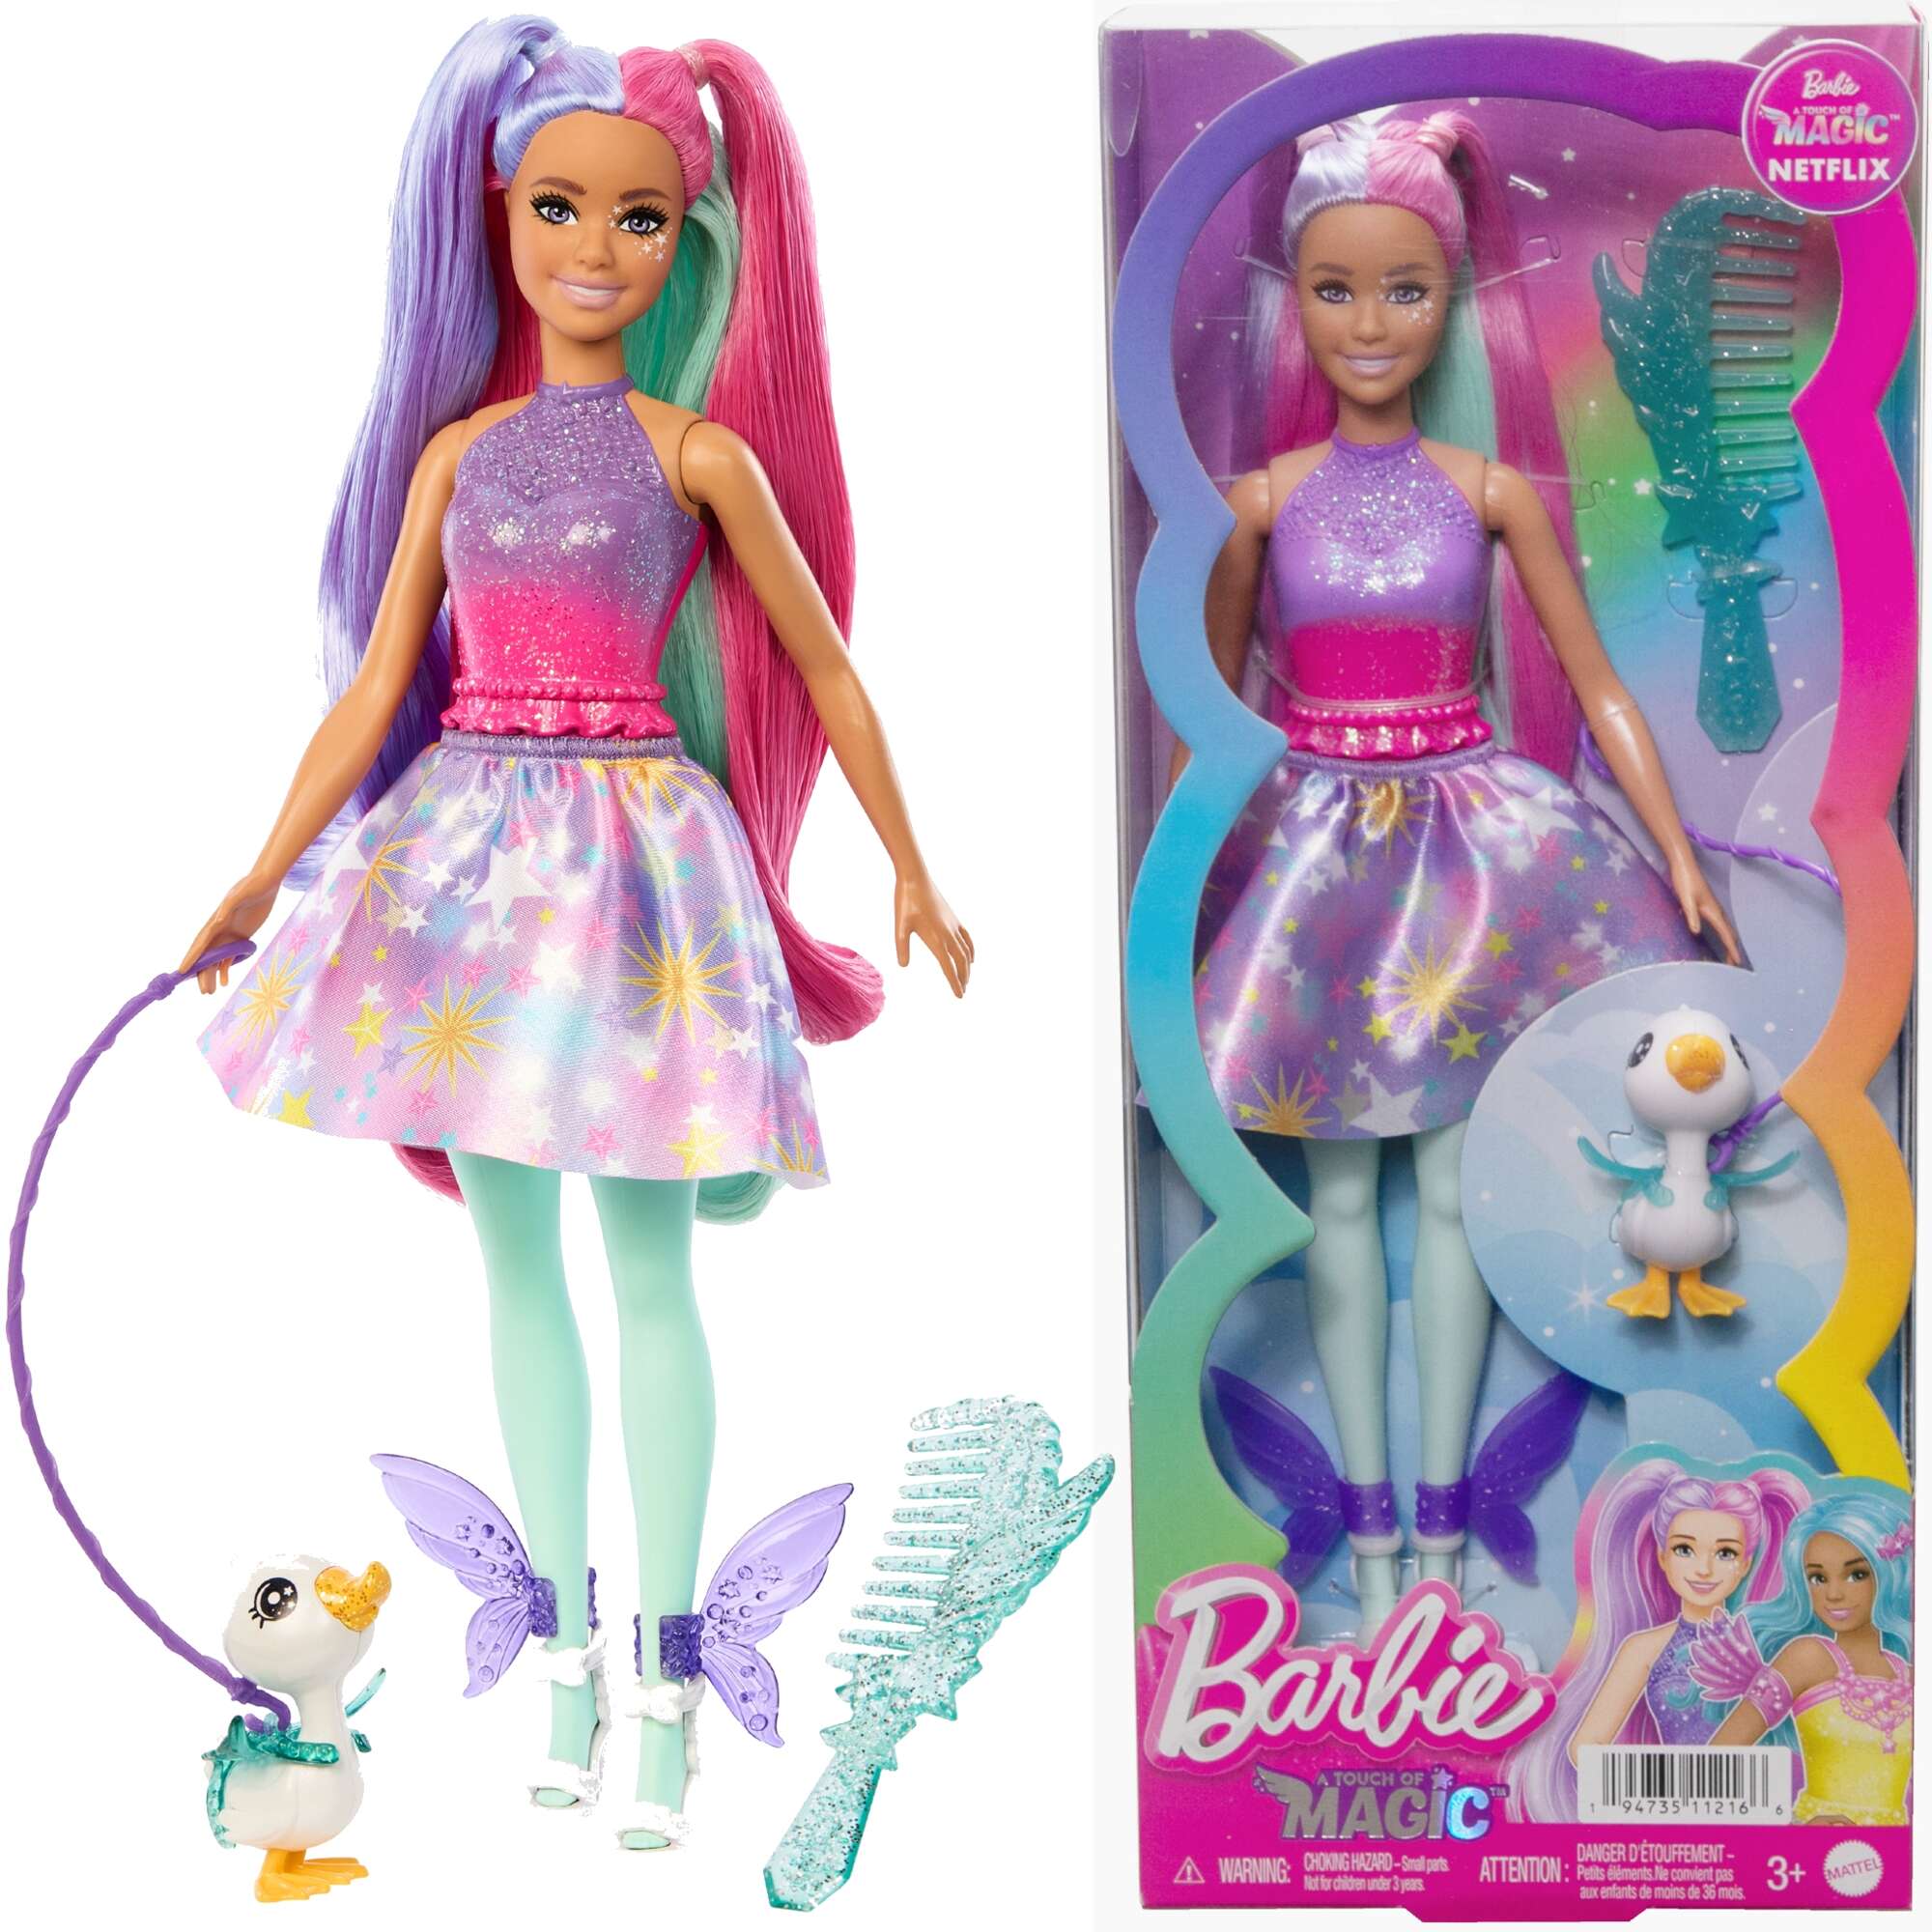 Barbie ma³y zestaw Lalka Kolekcjonerska a Touch of Magic Teresa niebieskow³osa wró¿ka + pupil i akcesoria